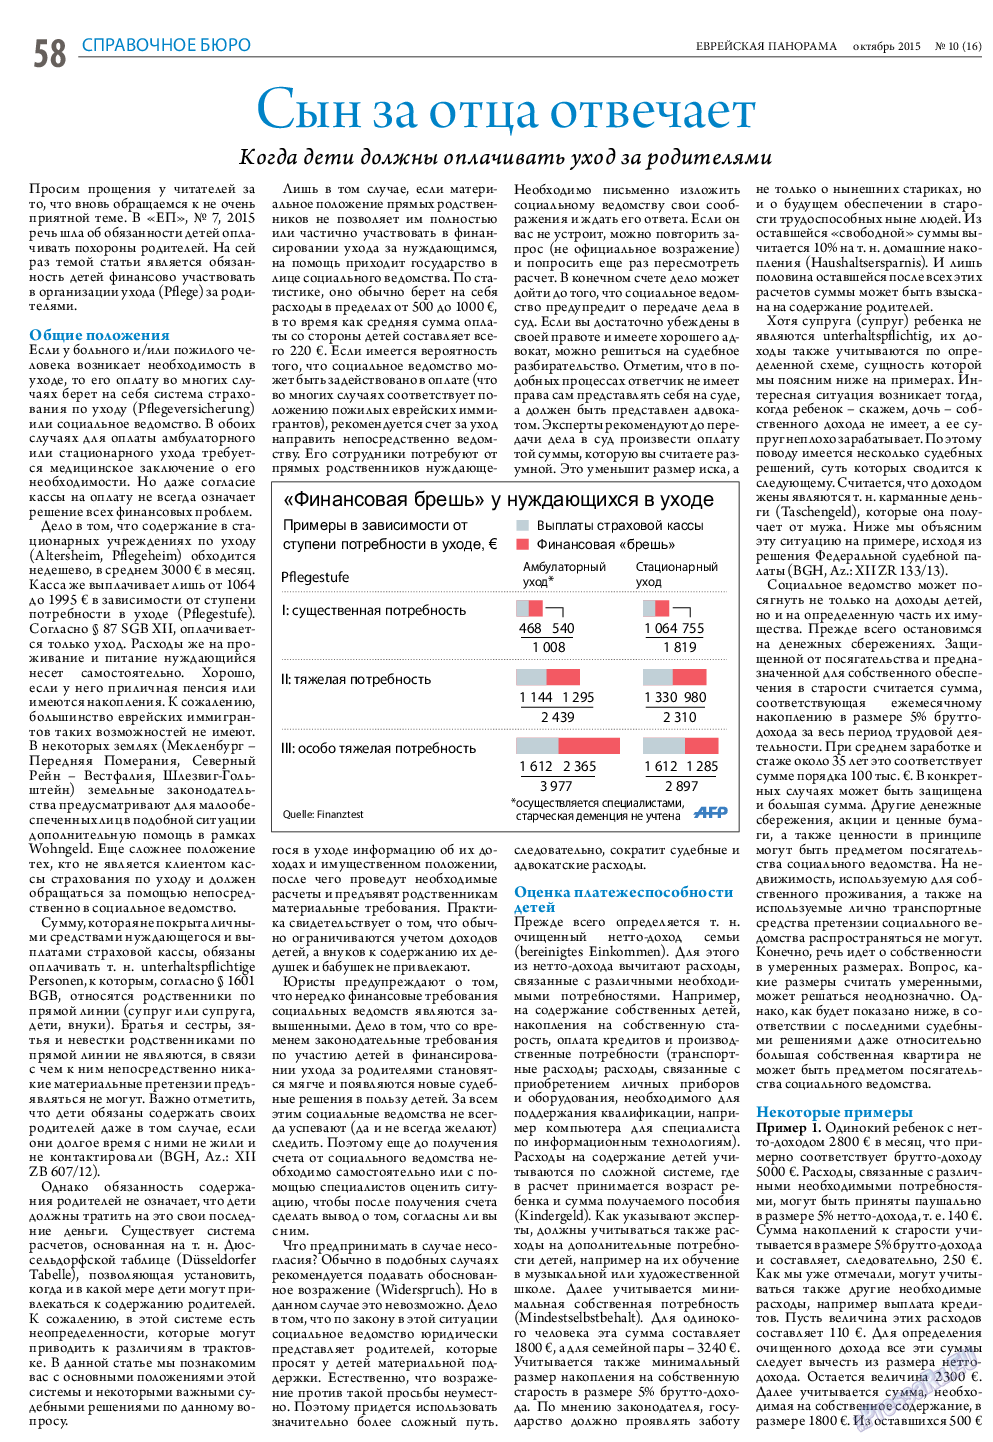 Еврейская панорама, газета. 2015 №10 стр.58